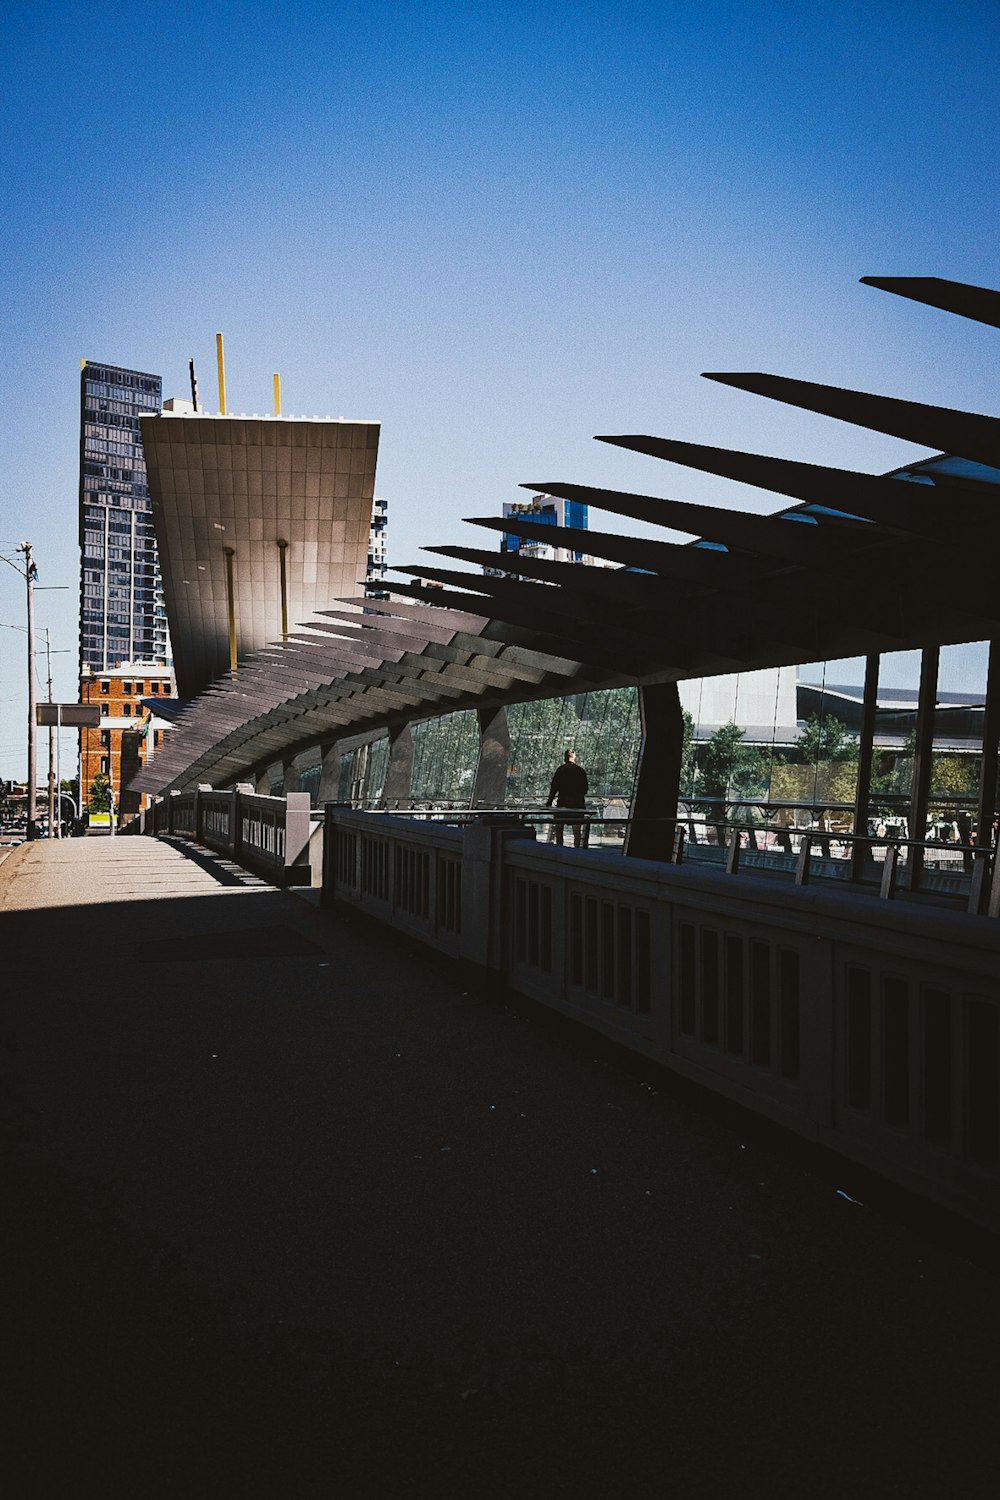 a person walking across a bridge near a tall building